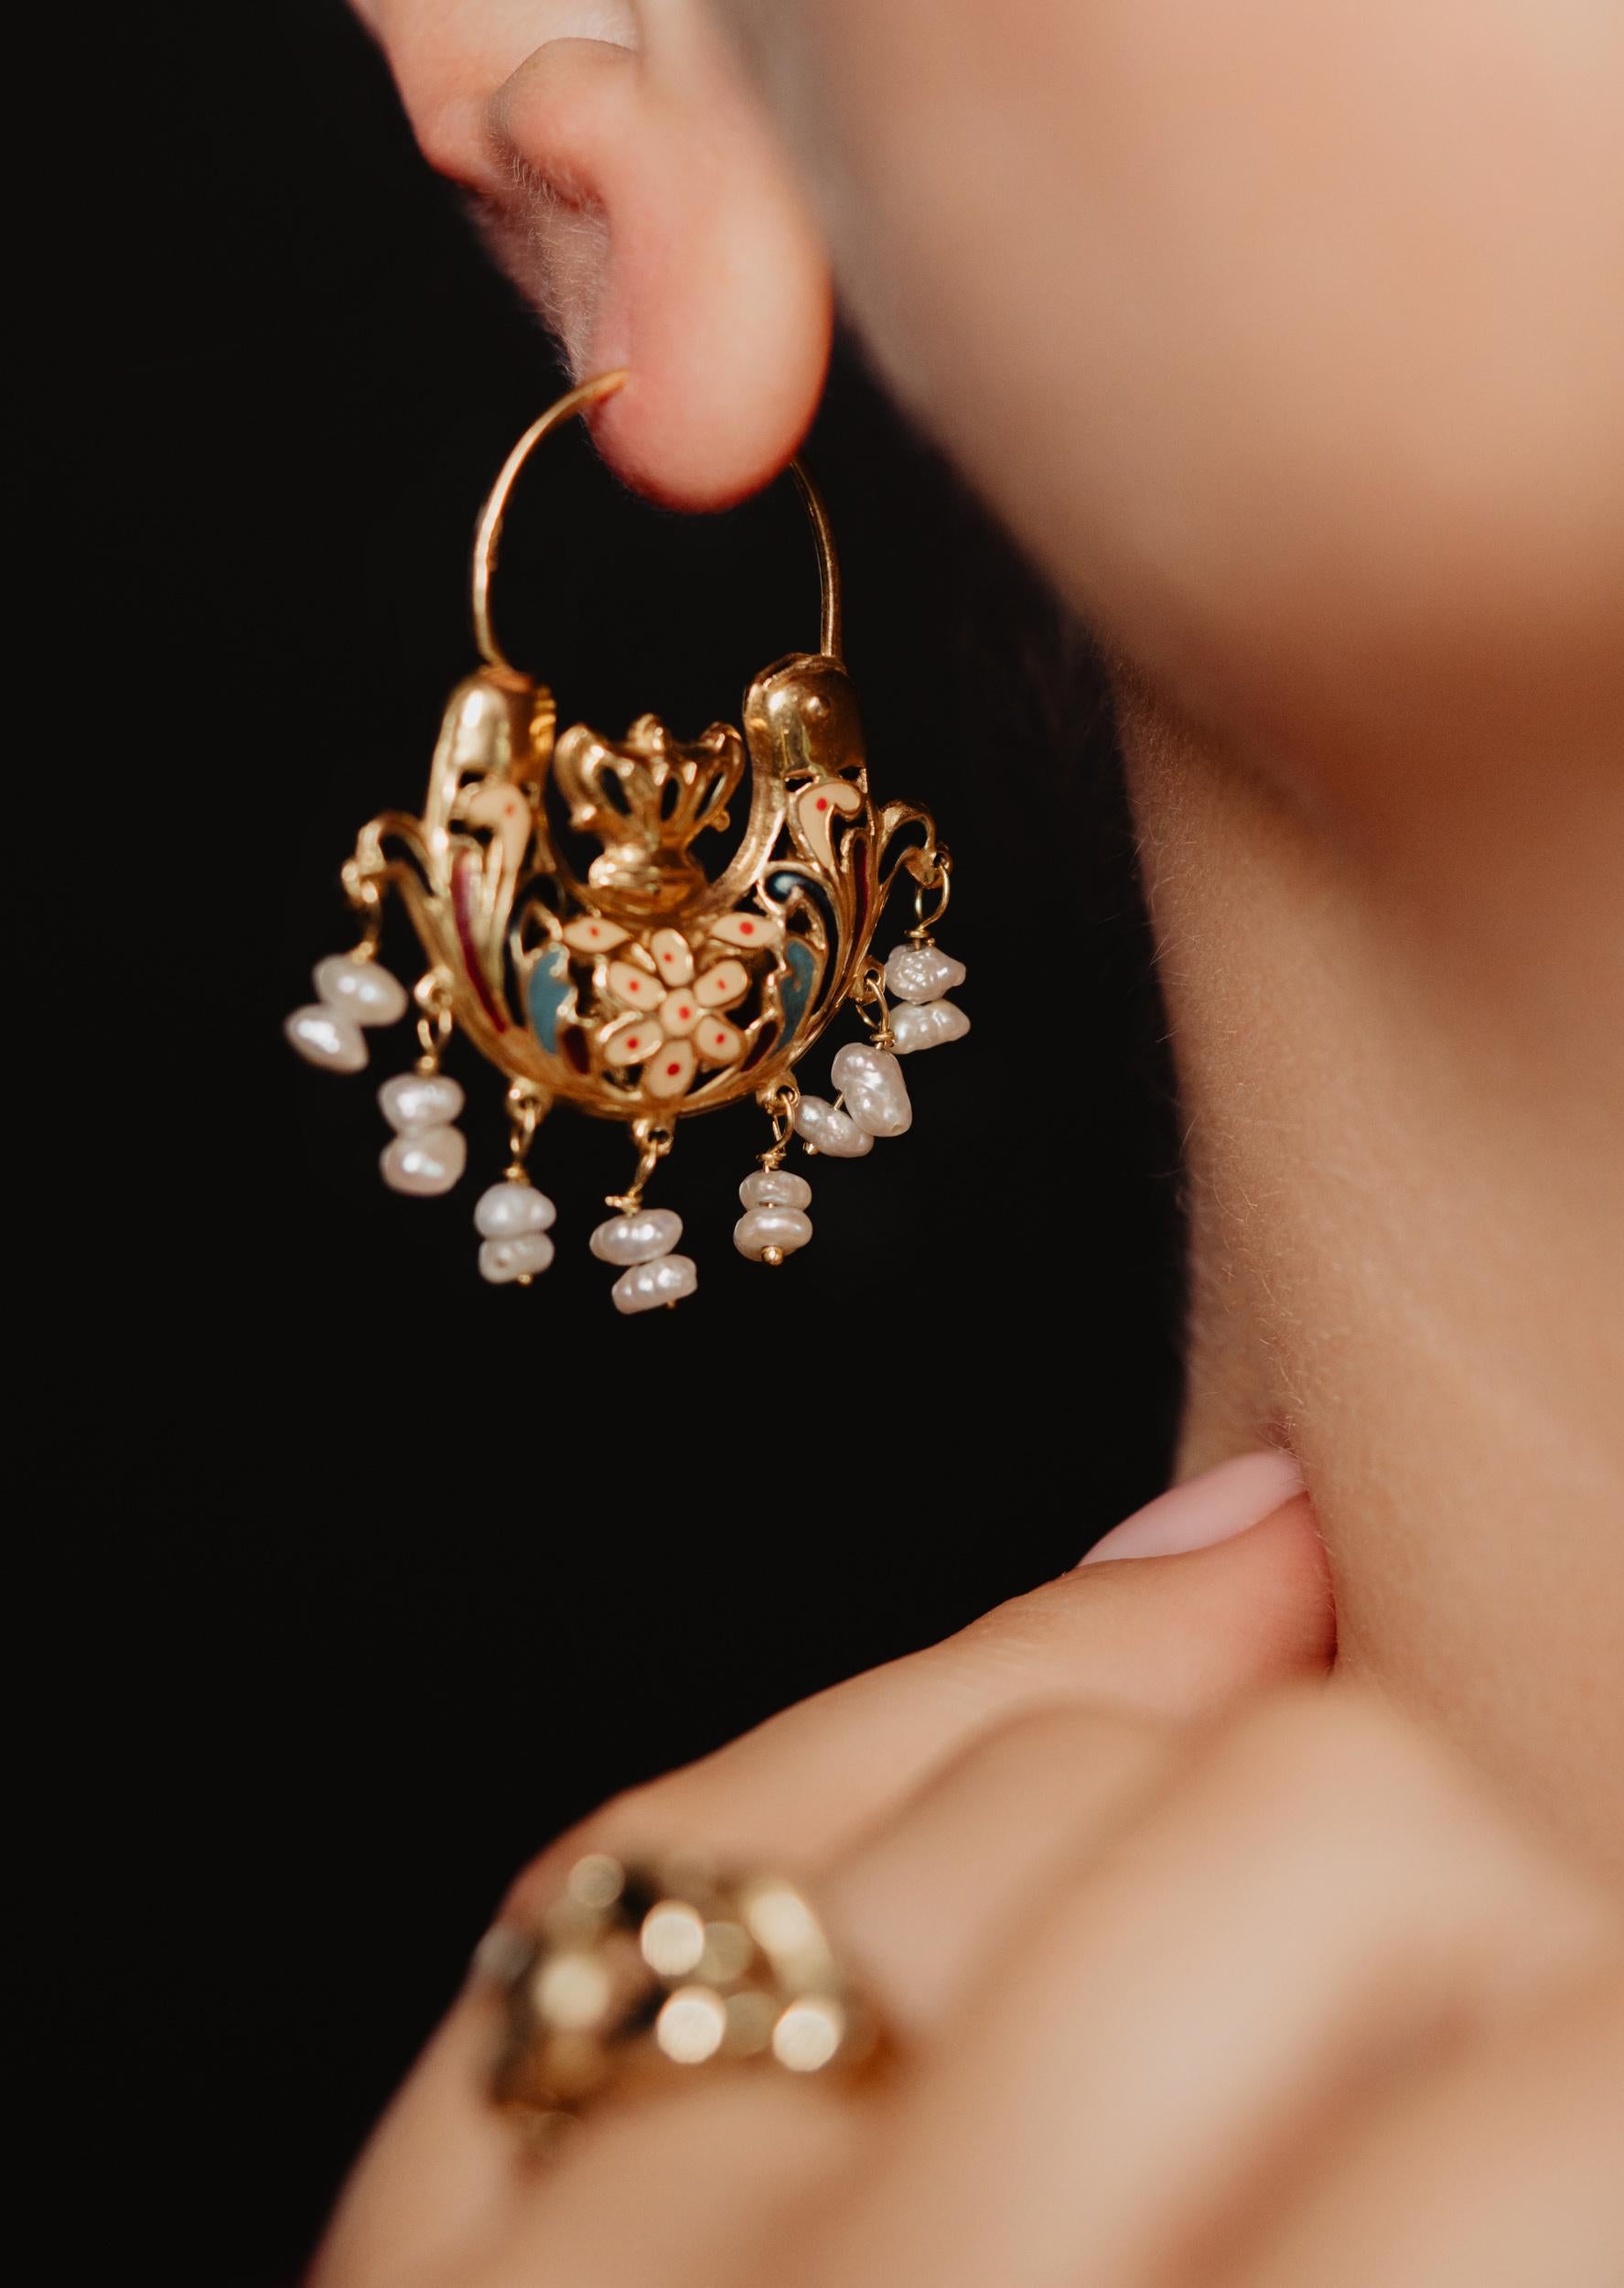 Baroque Revival Antique Archiological Revival Enamel Urn Earrings, 19th Century Italian Antiques